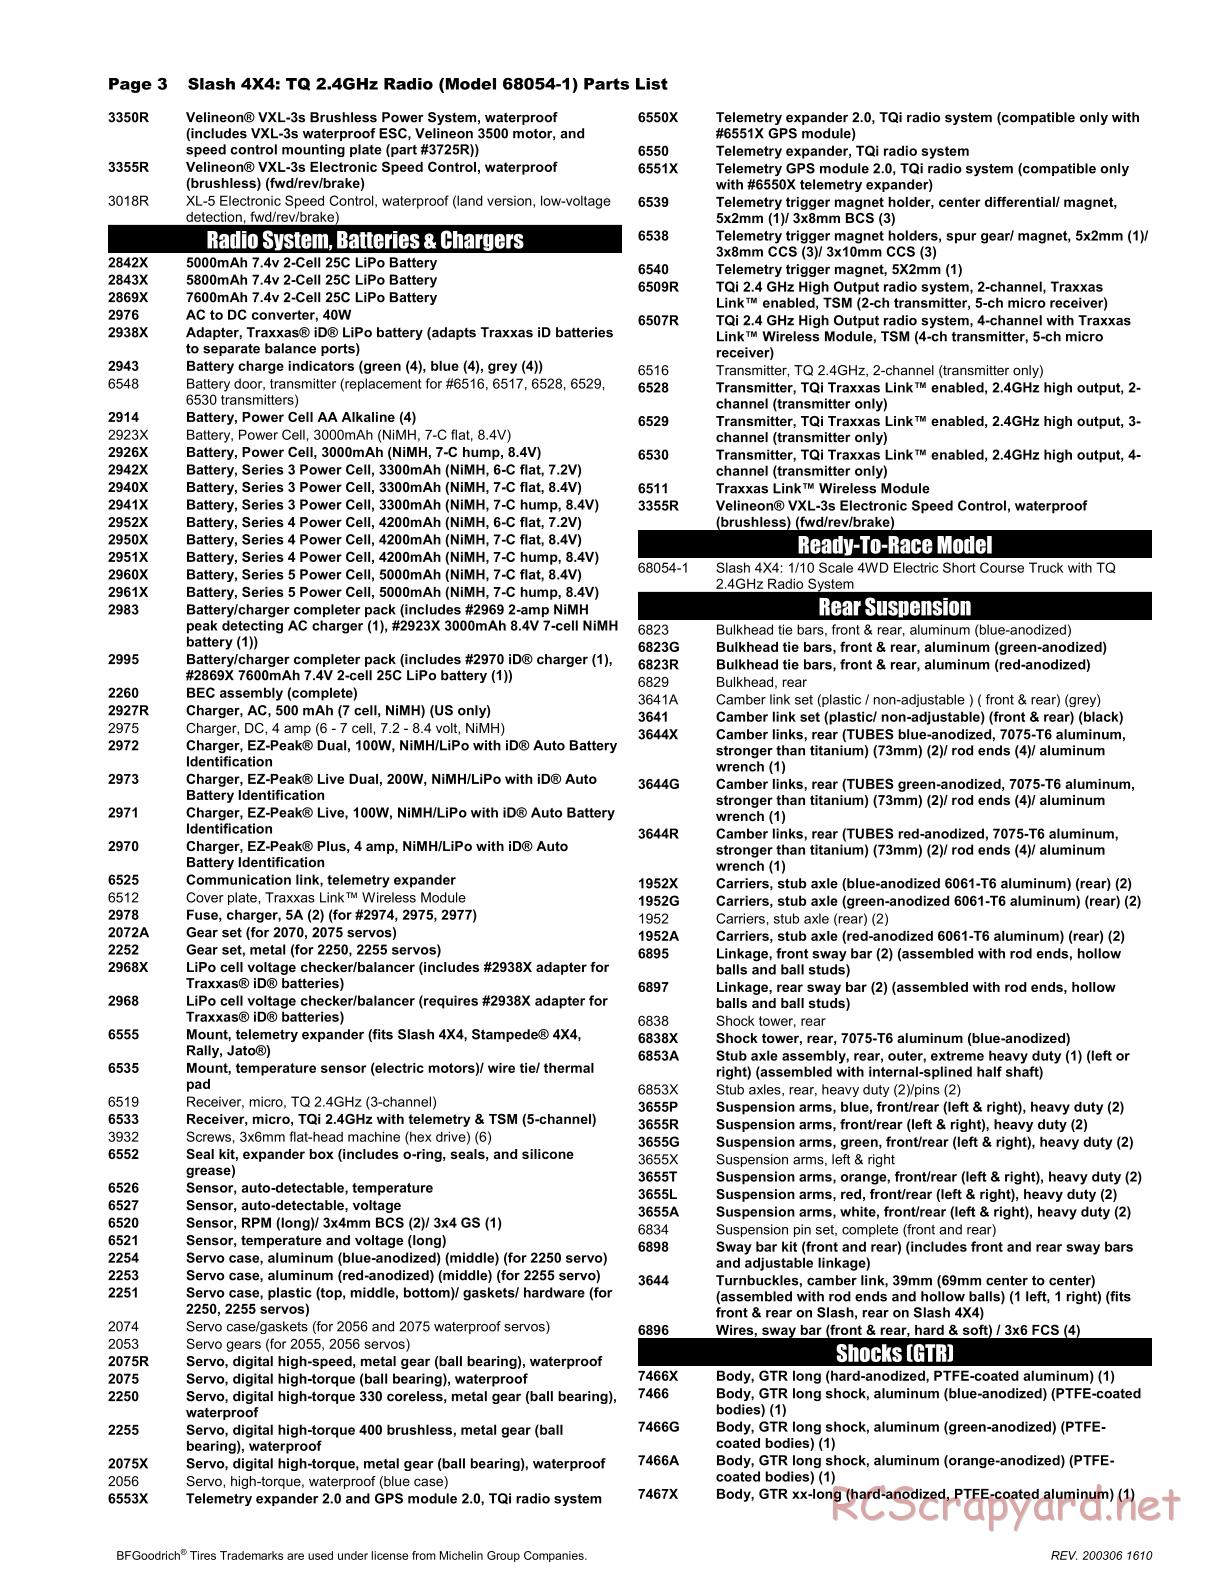 Traxxas - Slash 4x4 Brushed - Parts List - Page 3